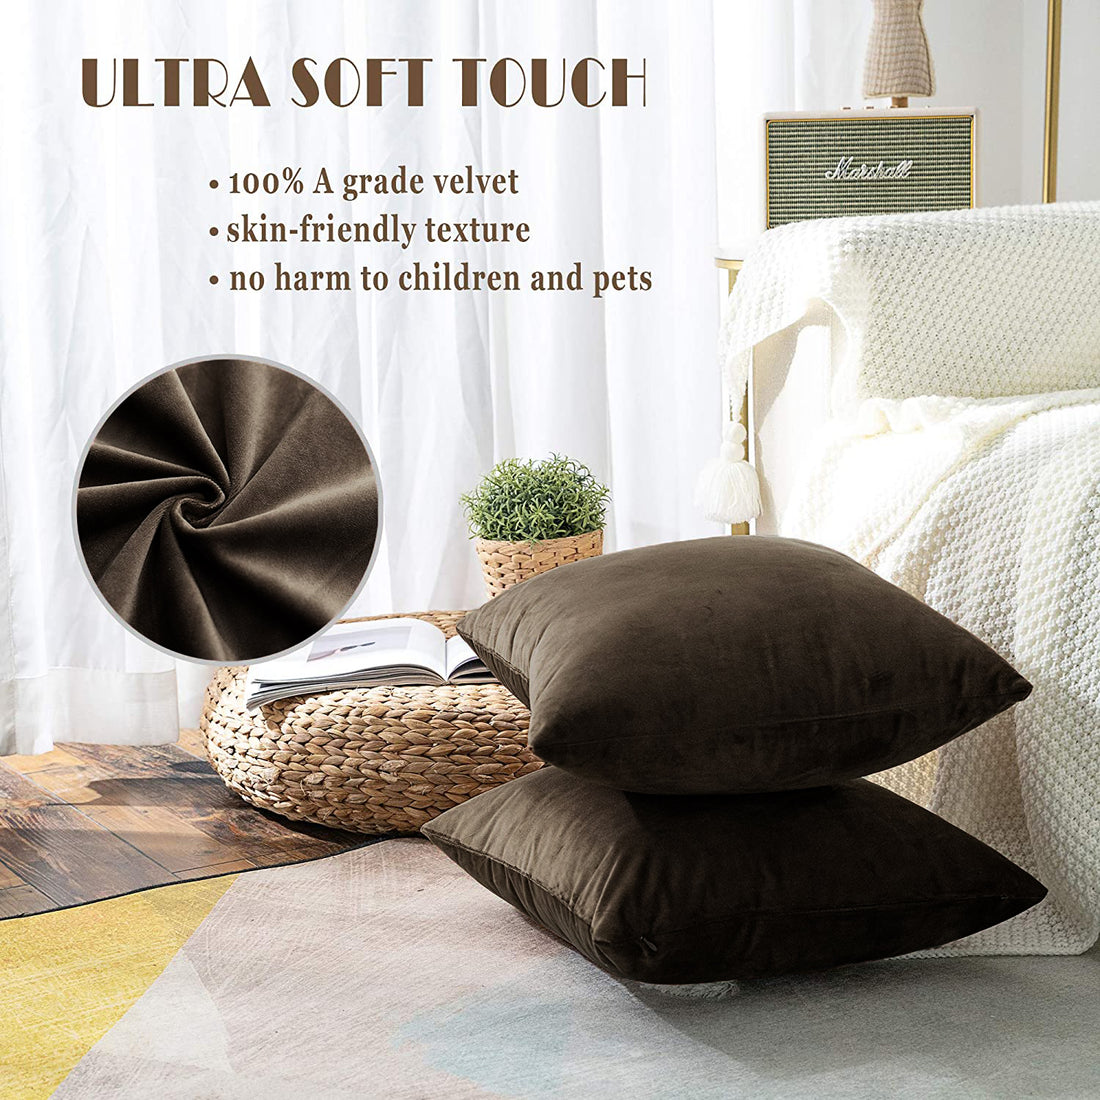 Premium Velvet Reversible Decorative Throw Pillow/Cushion Covers